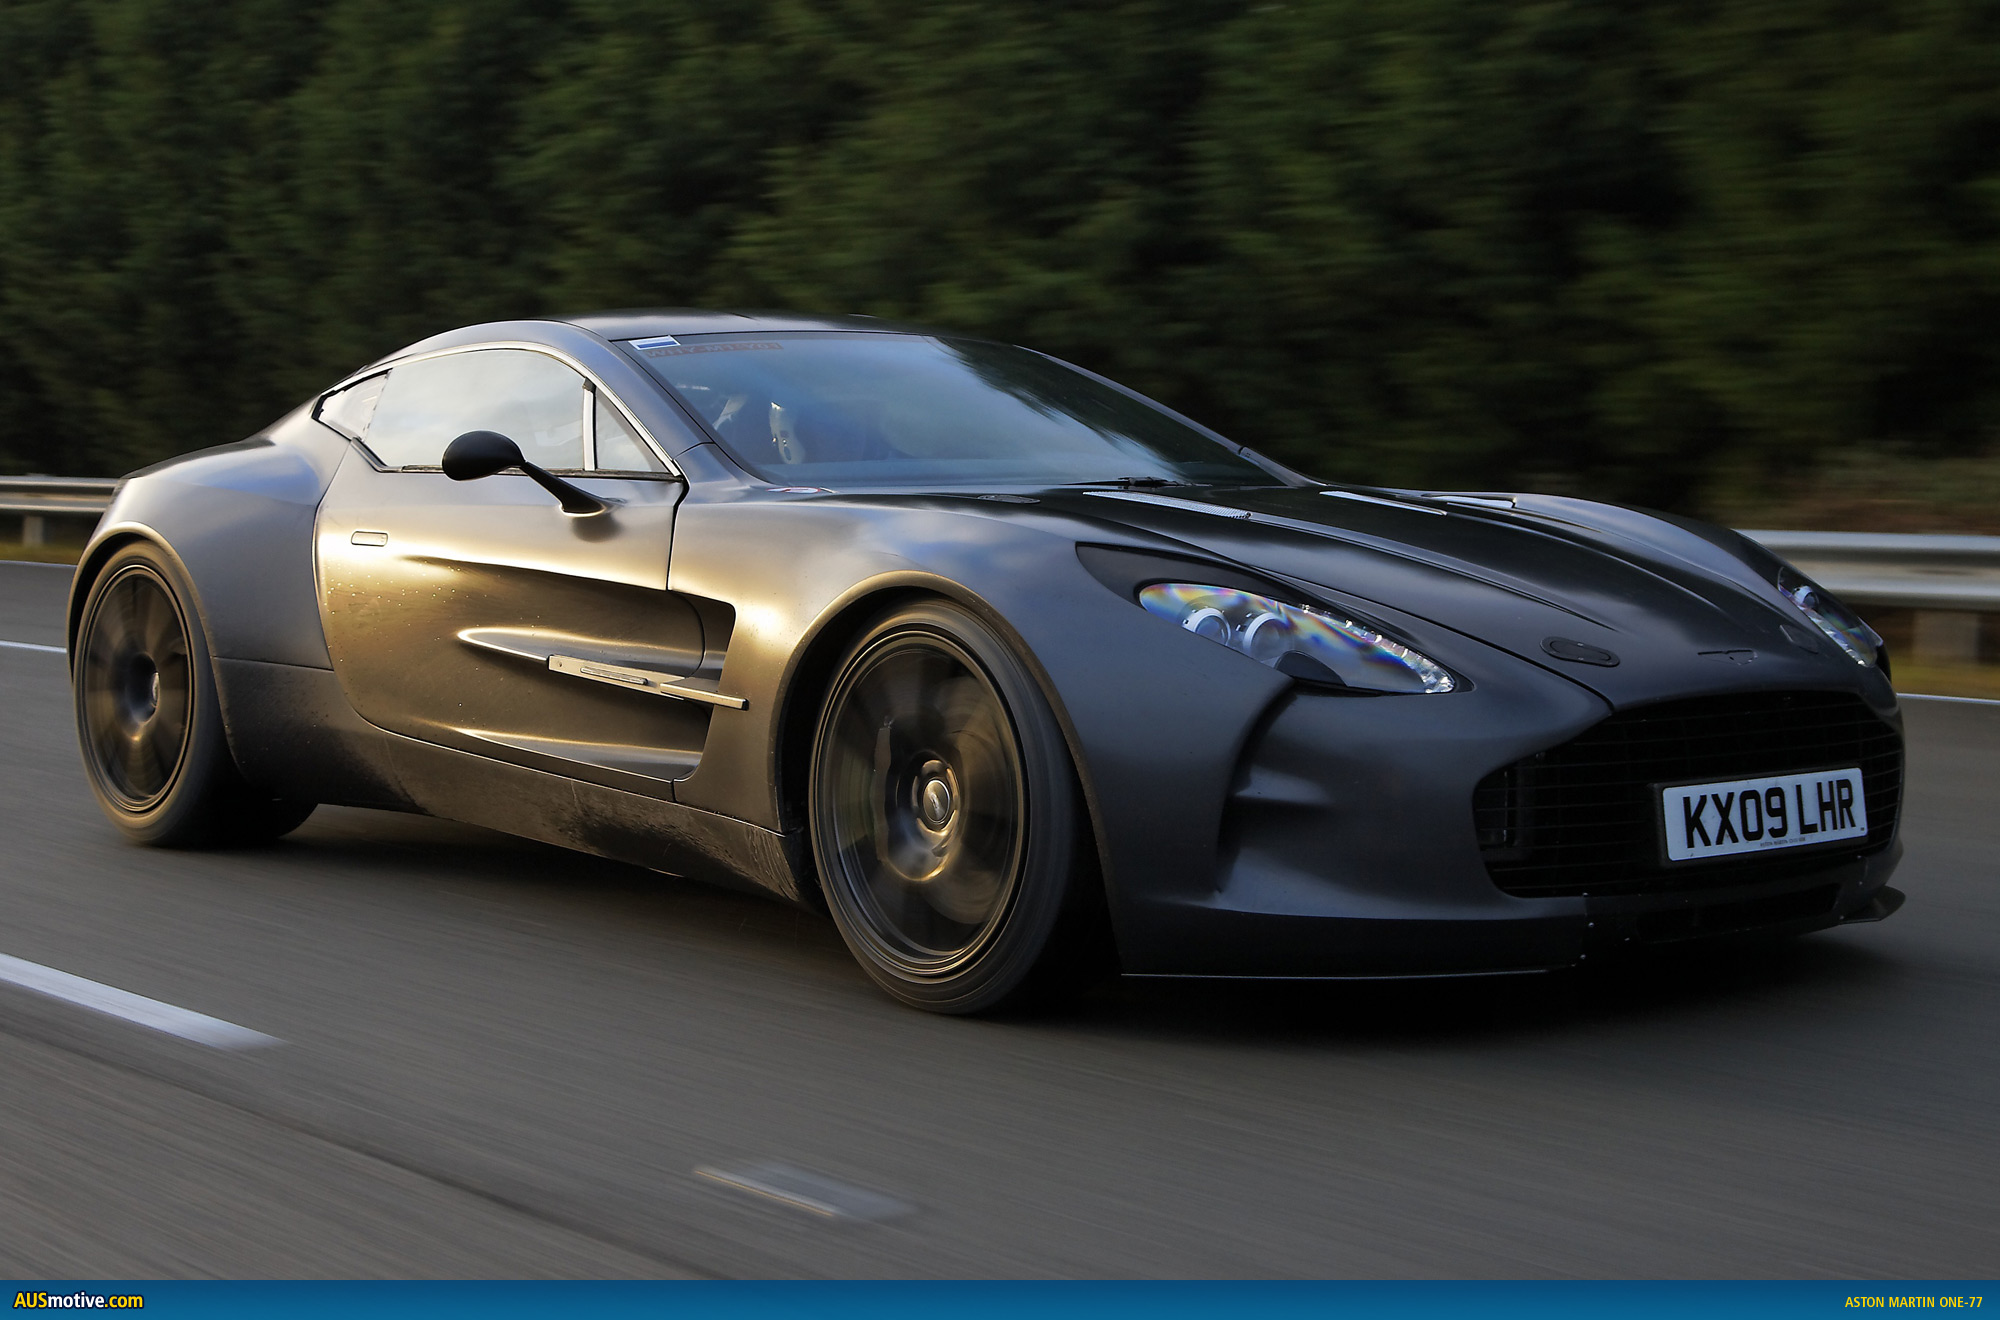 AUSmotive.com » Aston’s One-77 development is up to speed